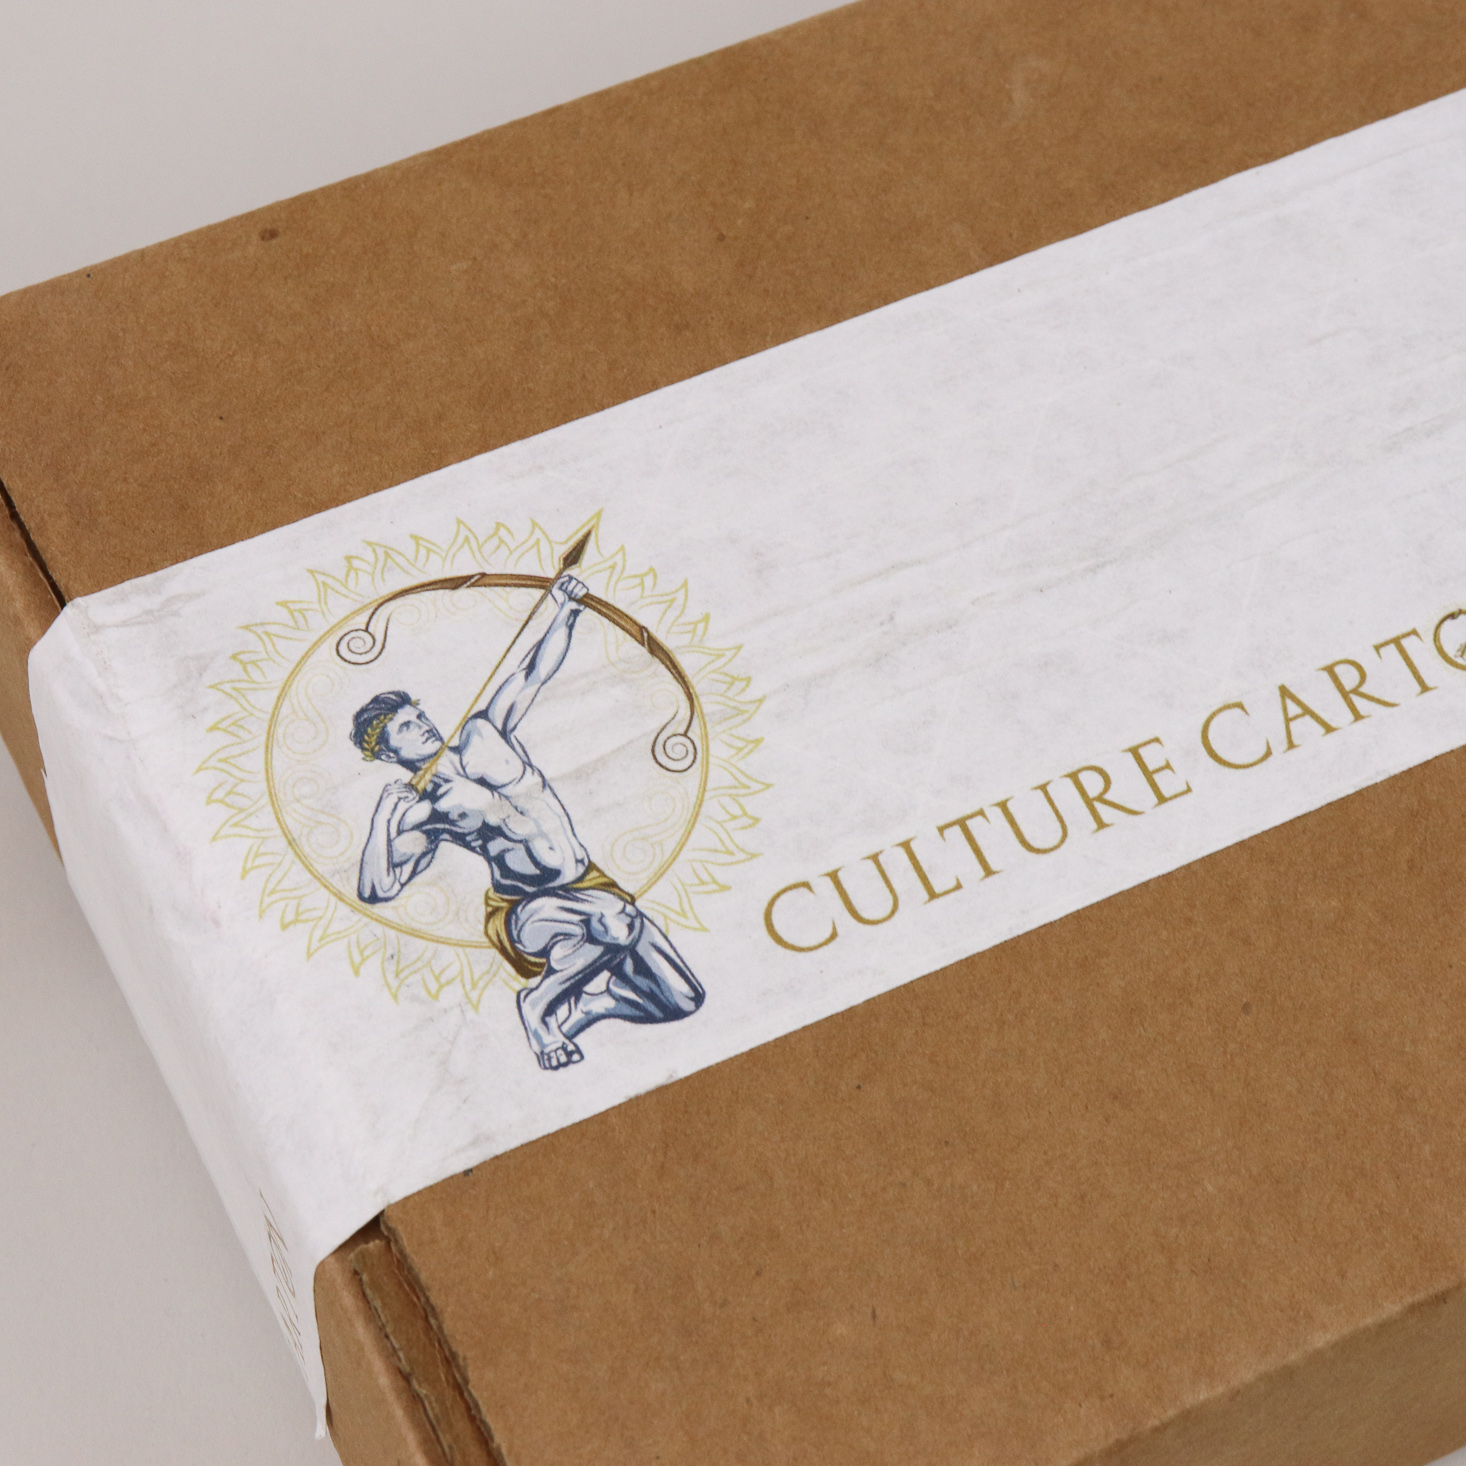 Culture Carton Men’s Subscription Box Review + Coupon – February 2019